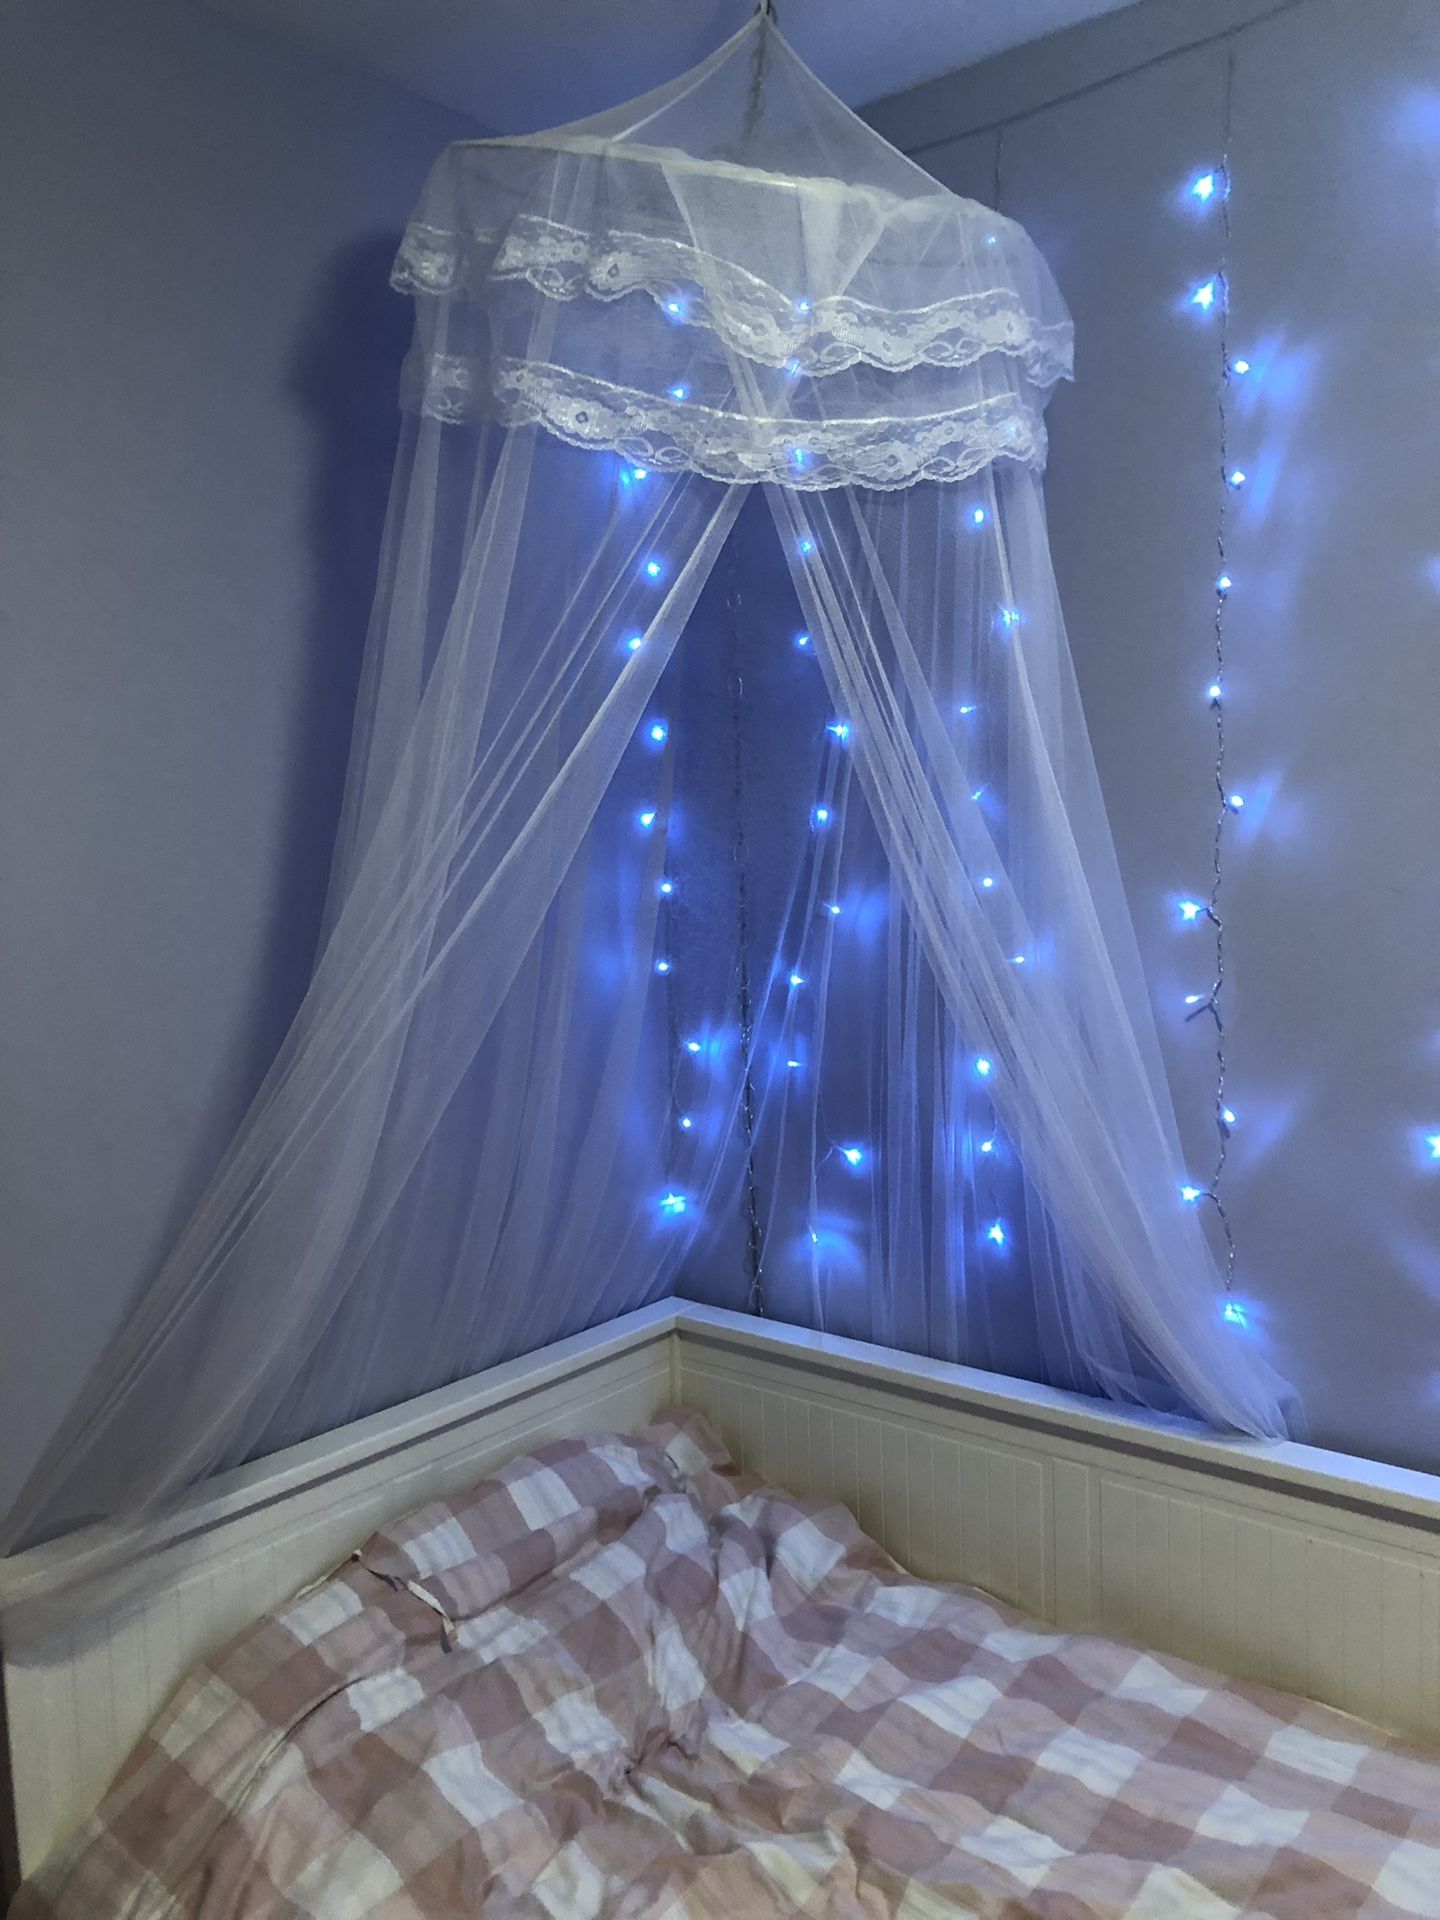 Princess bedroom canopy